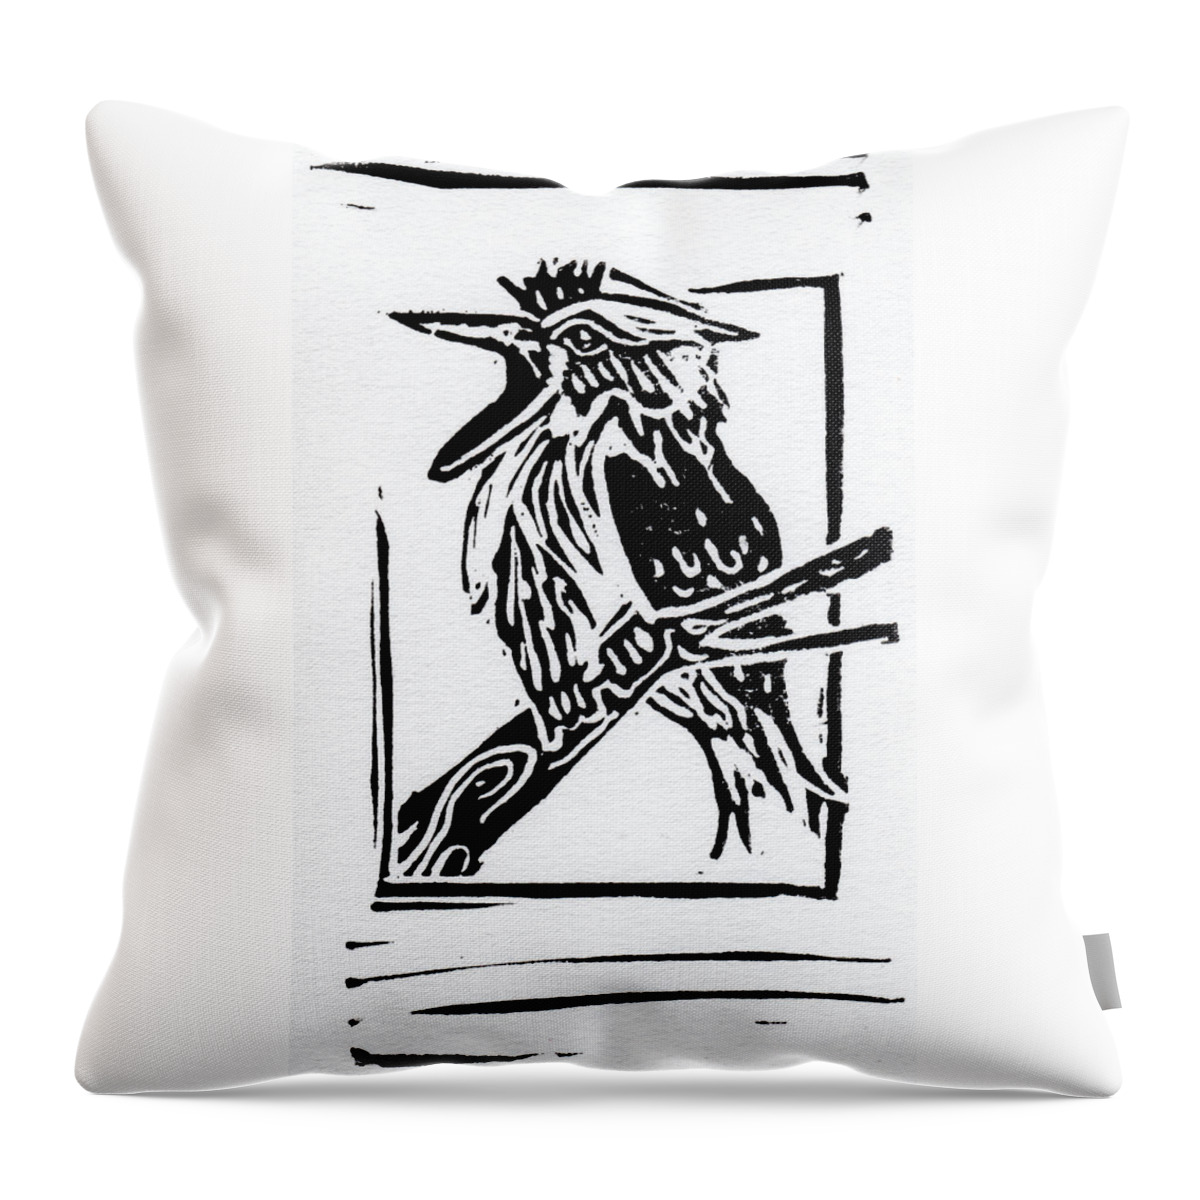 Kookaburra Throw Pillow featuring the painting Kookaburra by Tiffany DiGiacomo